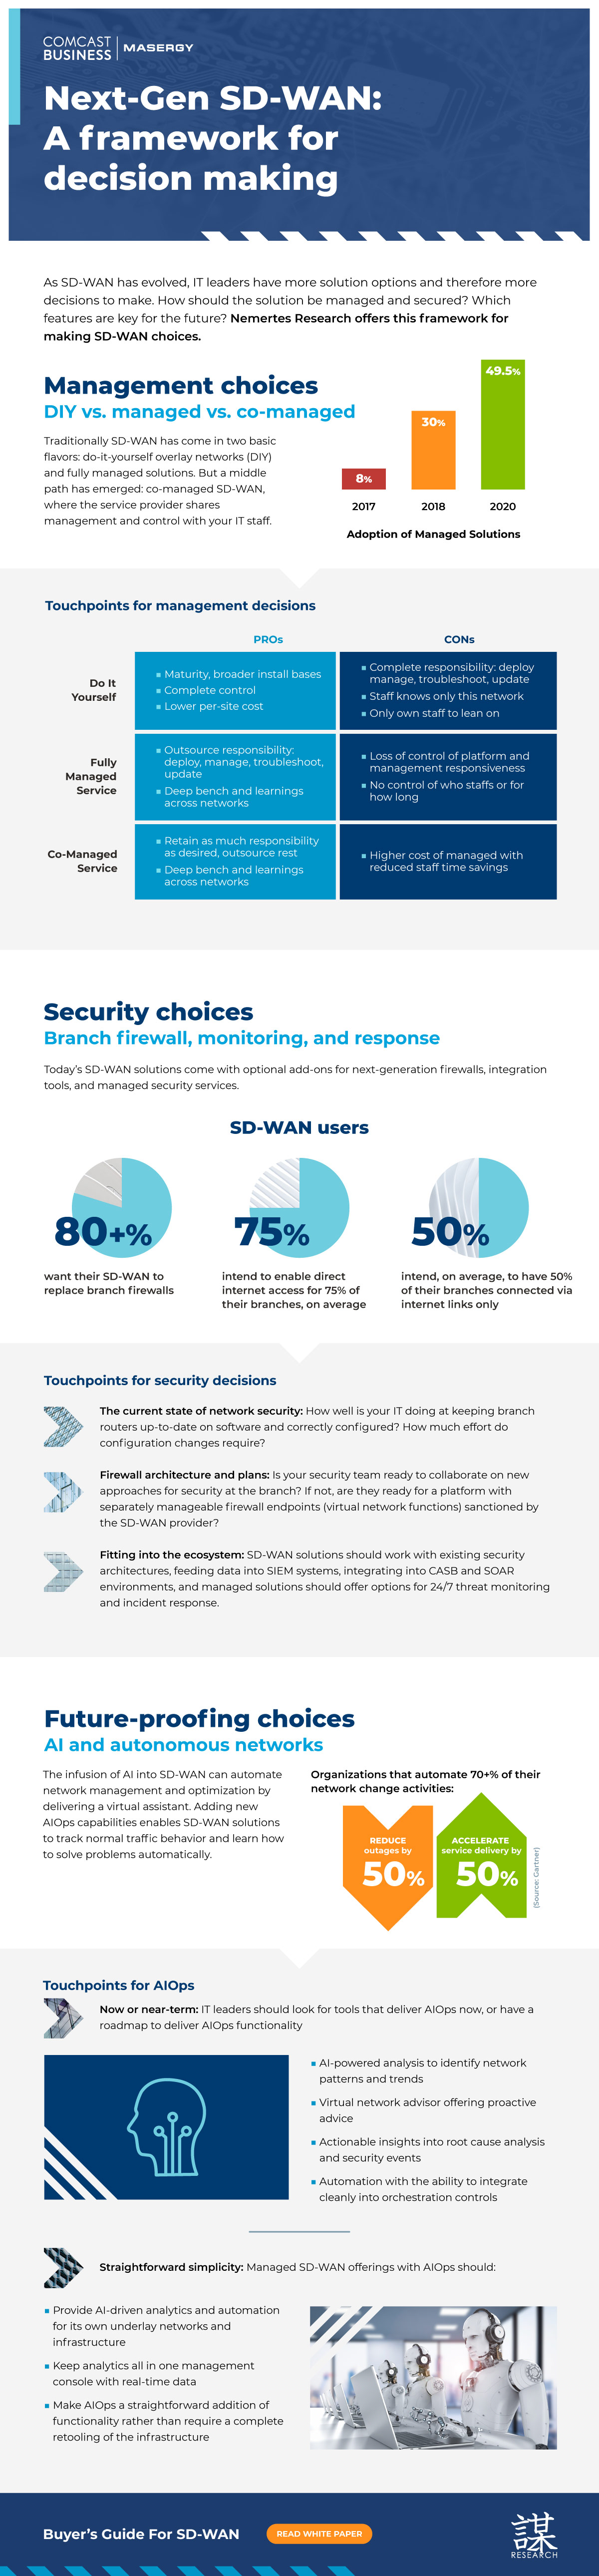 Next-Gen SD-WAN: A Framework for Decision Making Infographic